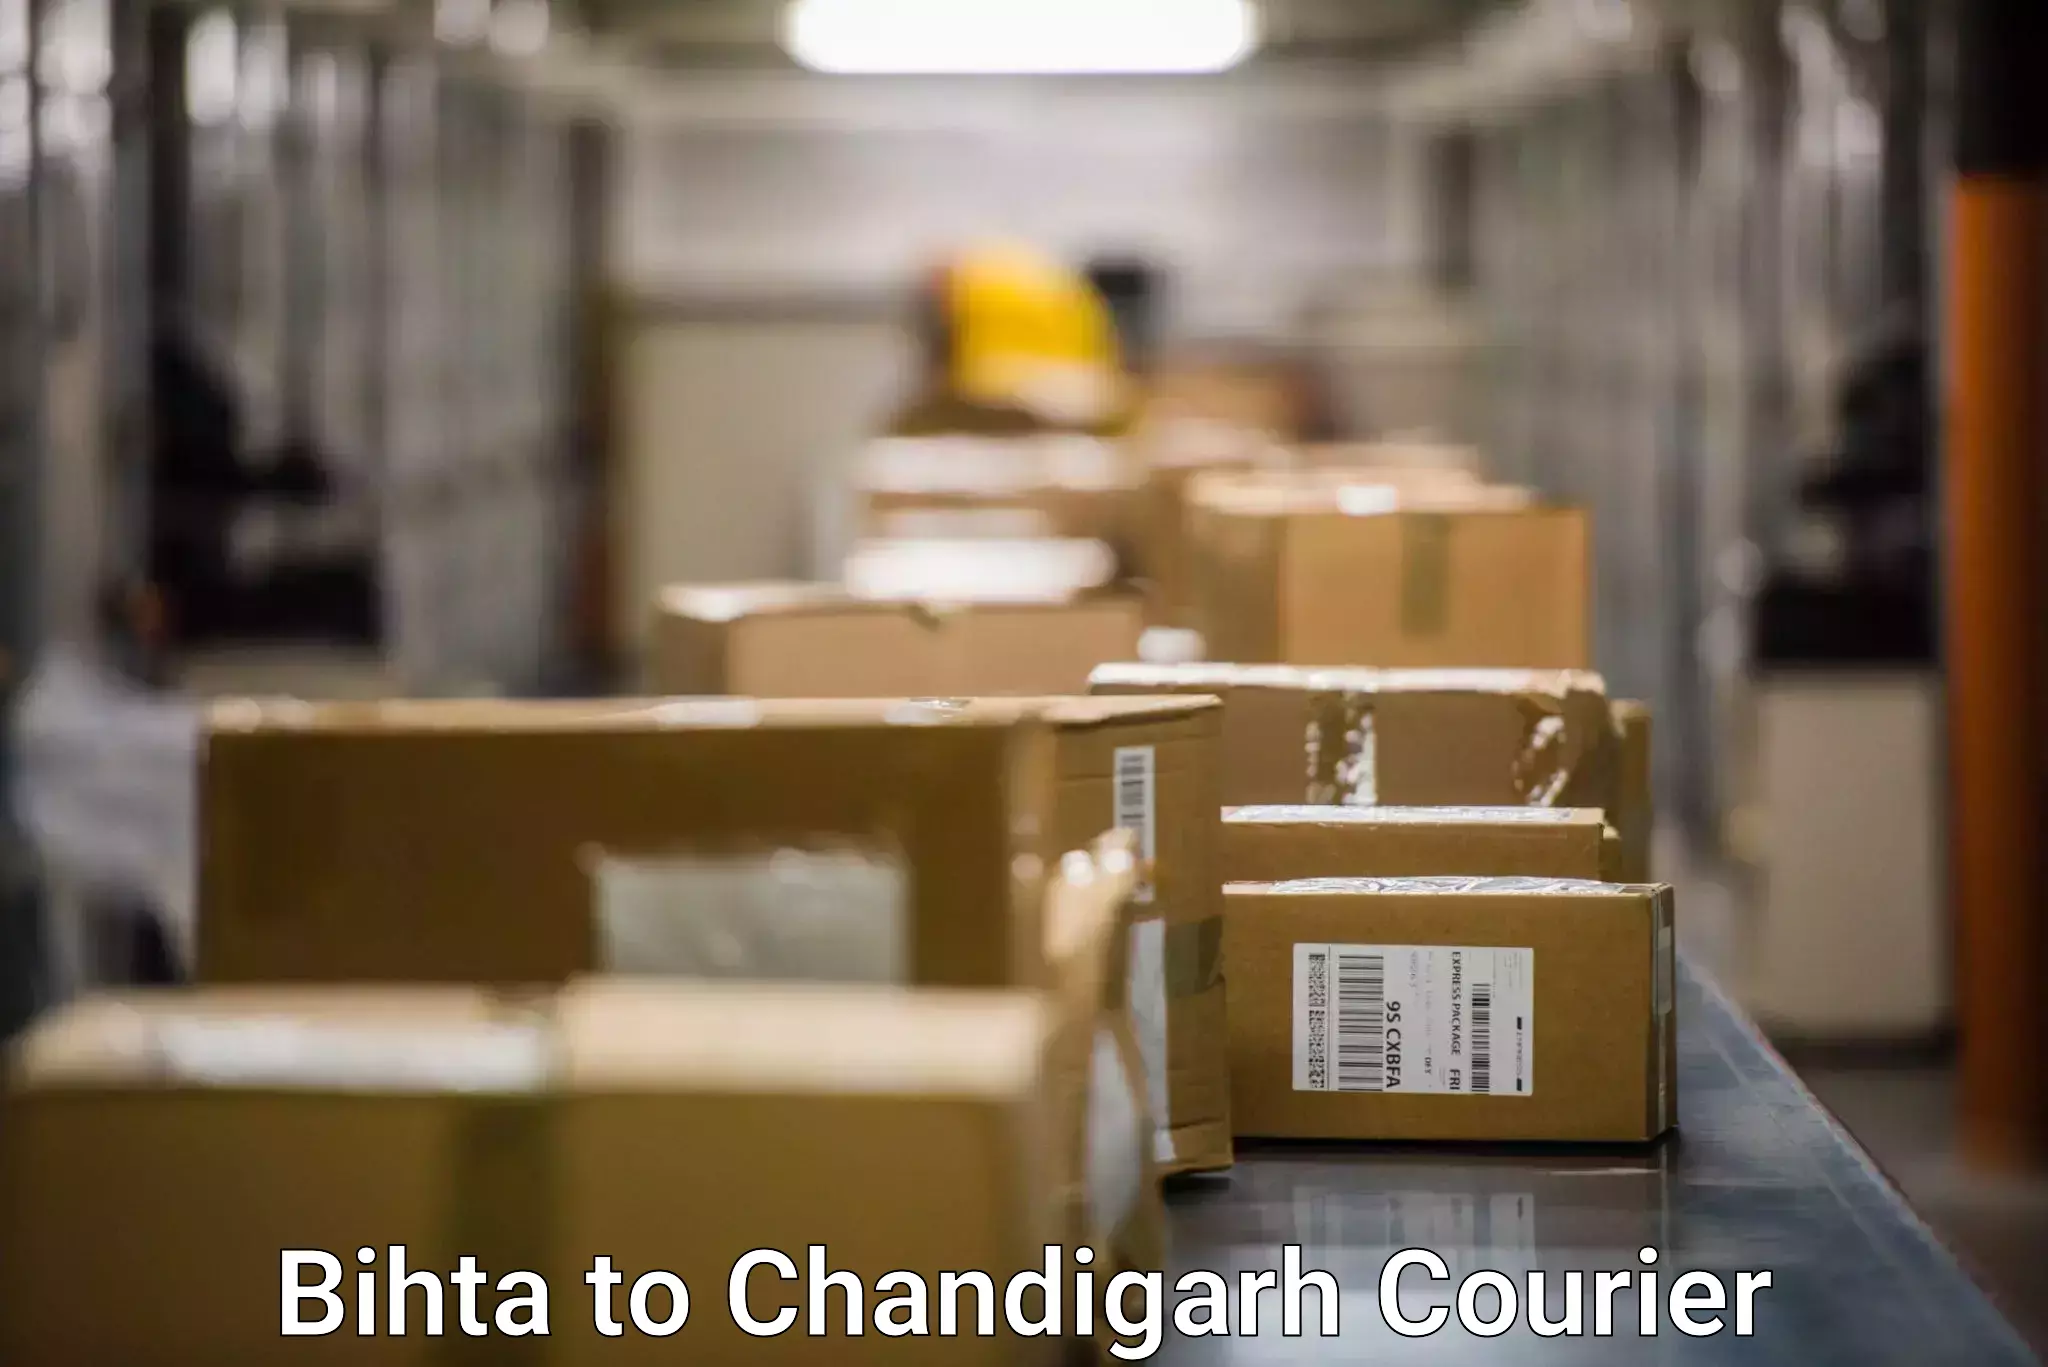 Logistics service provider Bihta to Chandigarh